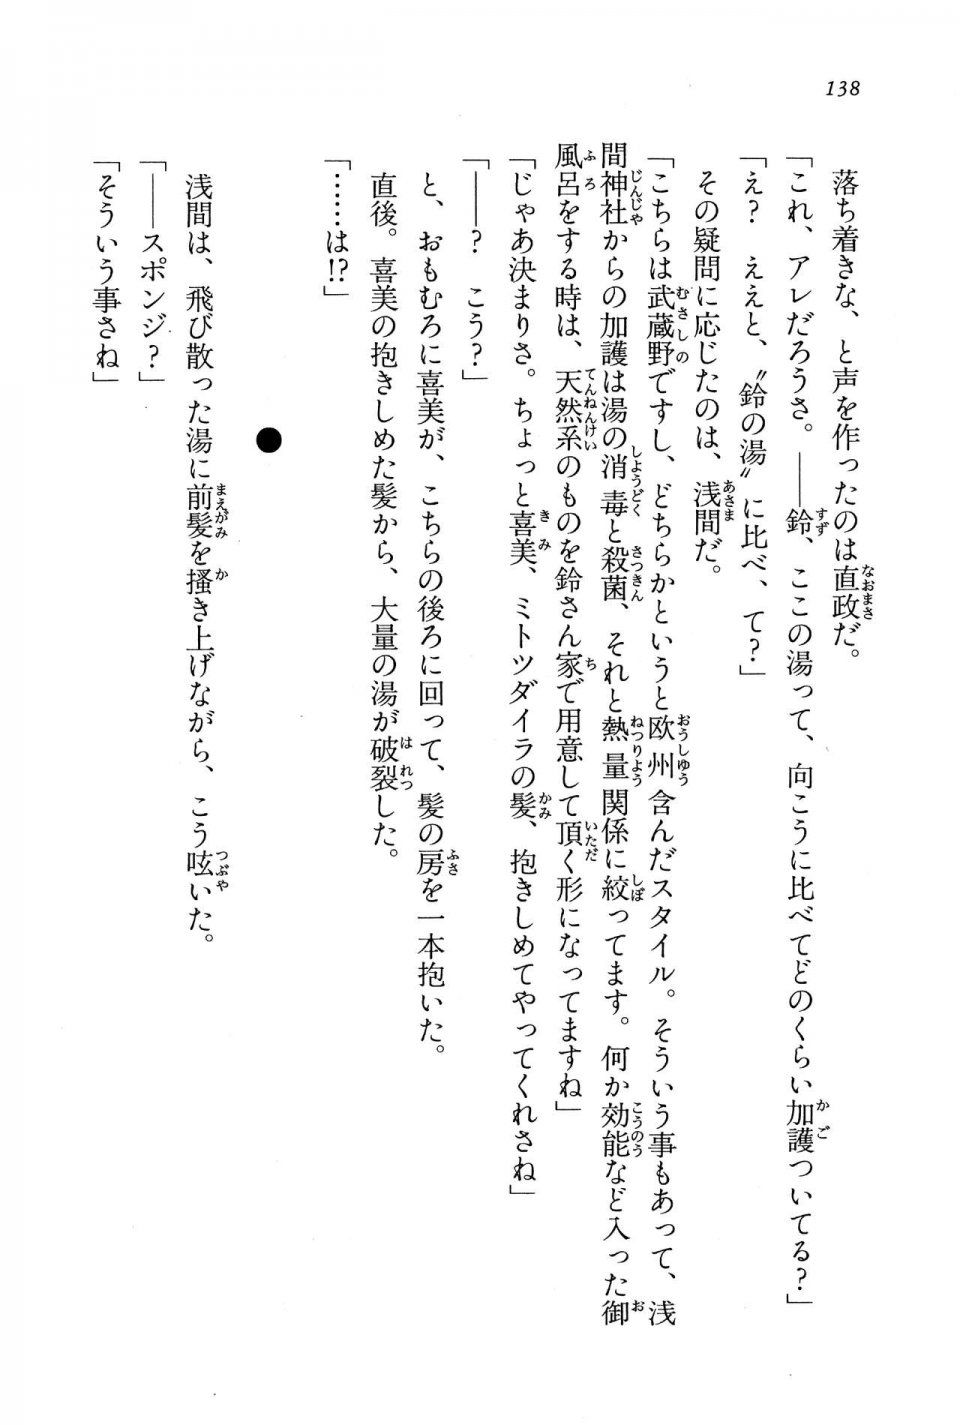 Kyoukai Senjou no Horizon BD Special Mininovel Vol 8(4B) - Photo #142